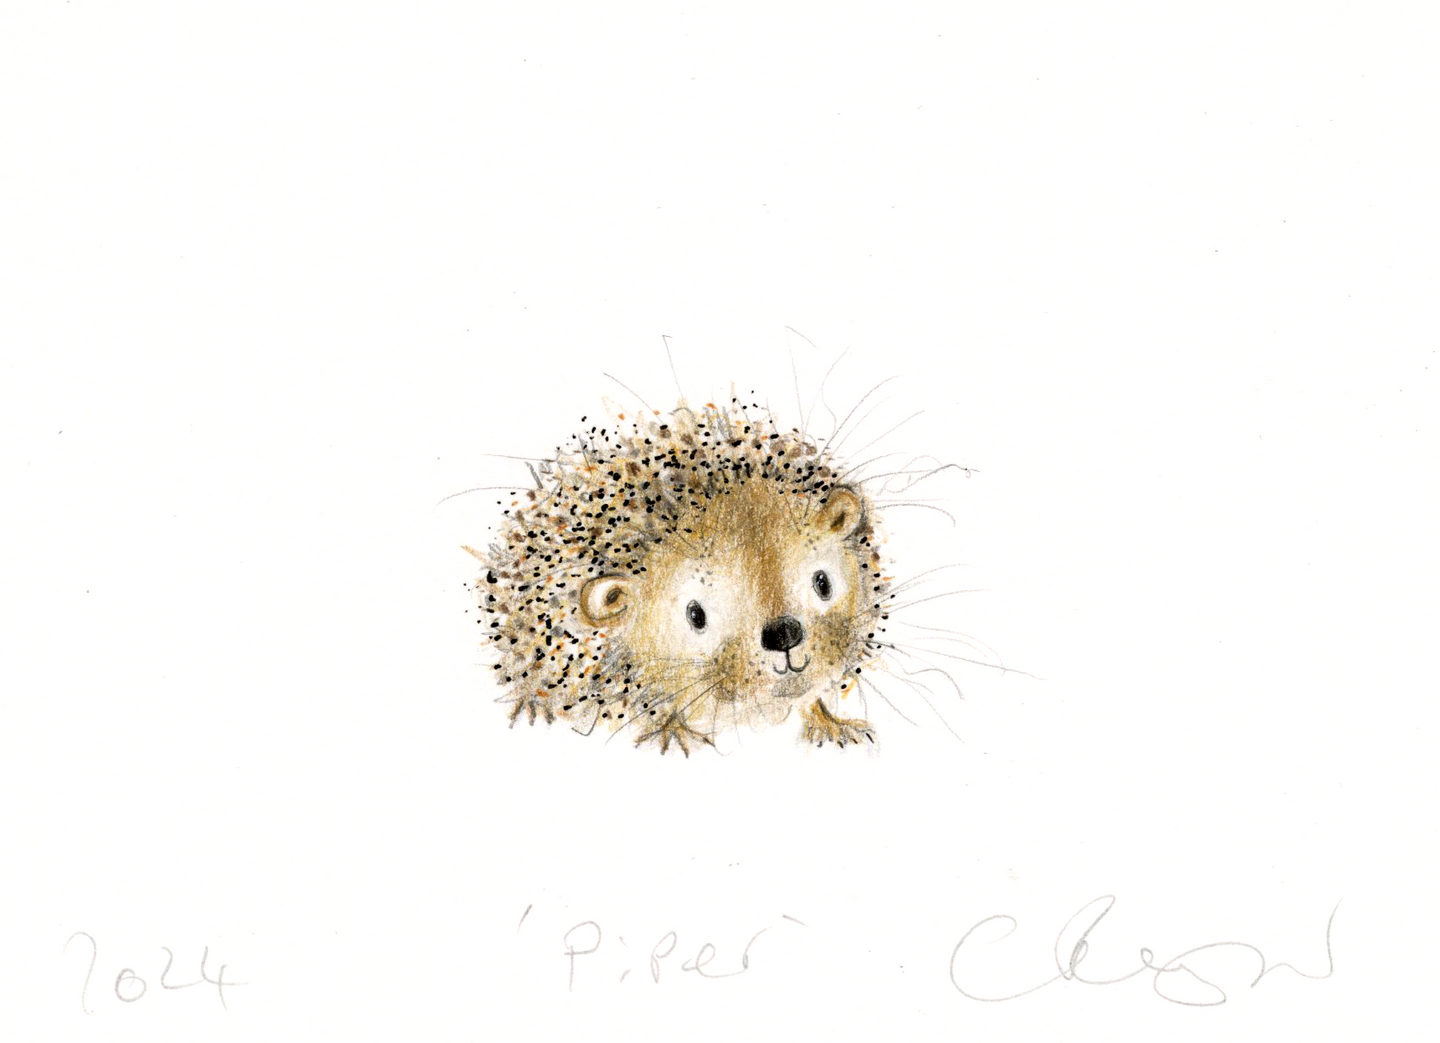 Piper the hedgehog